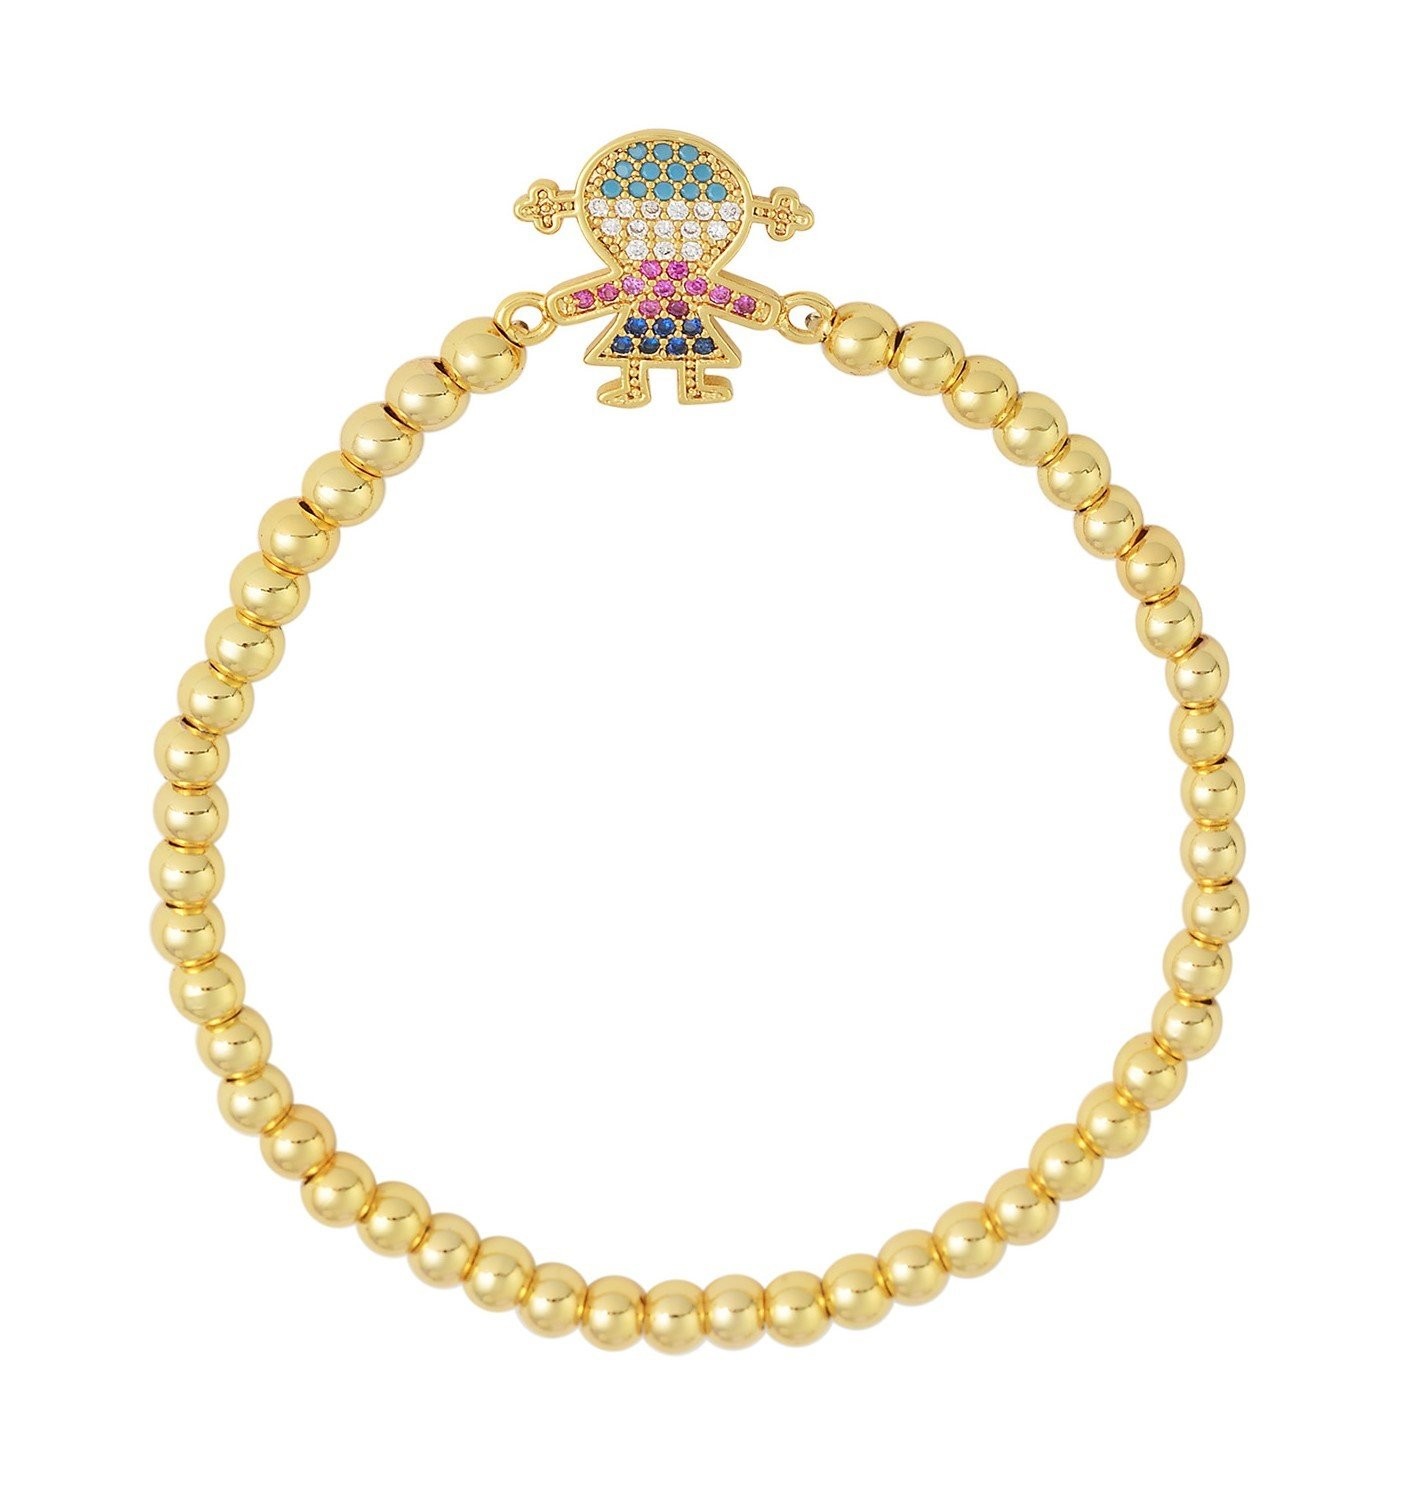 Stainless Steel Gold Tone Girl CZ Beads Bracelet